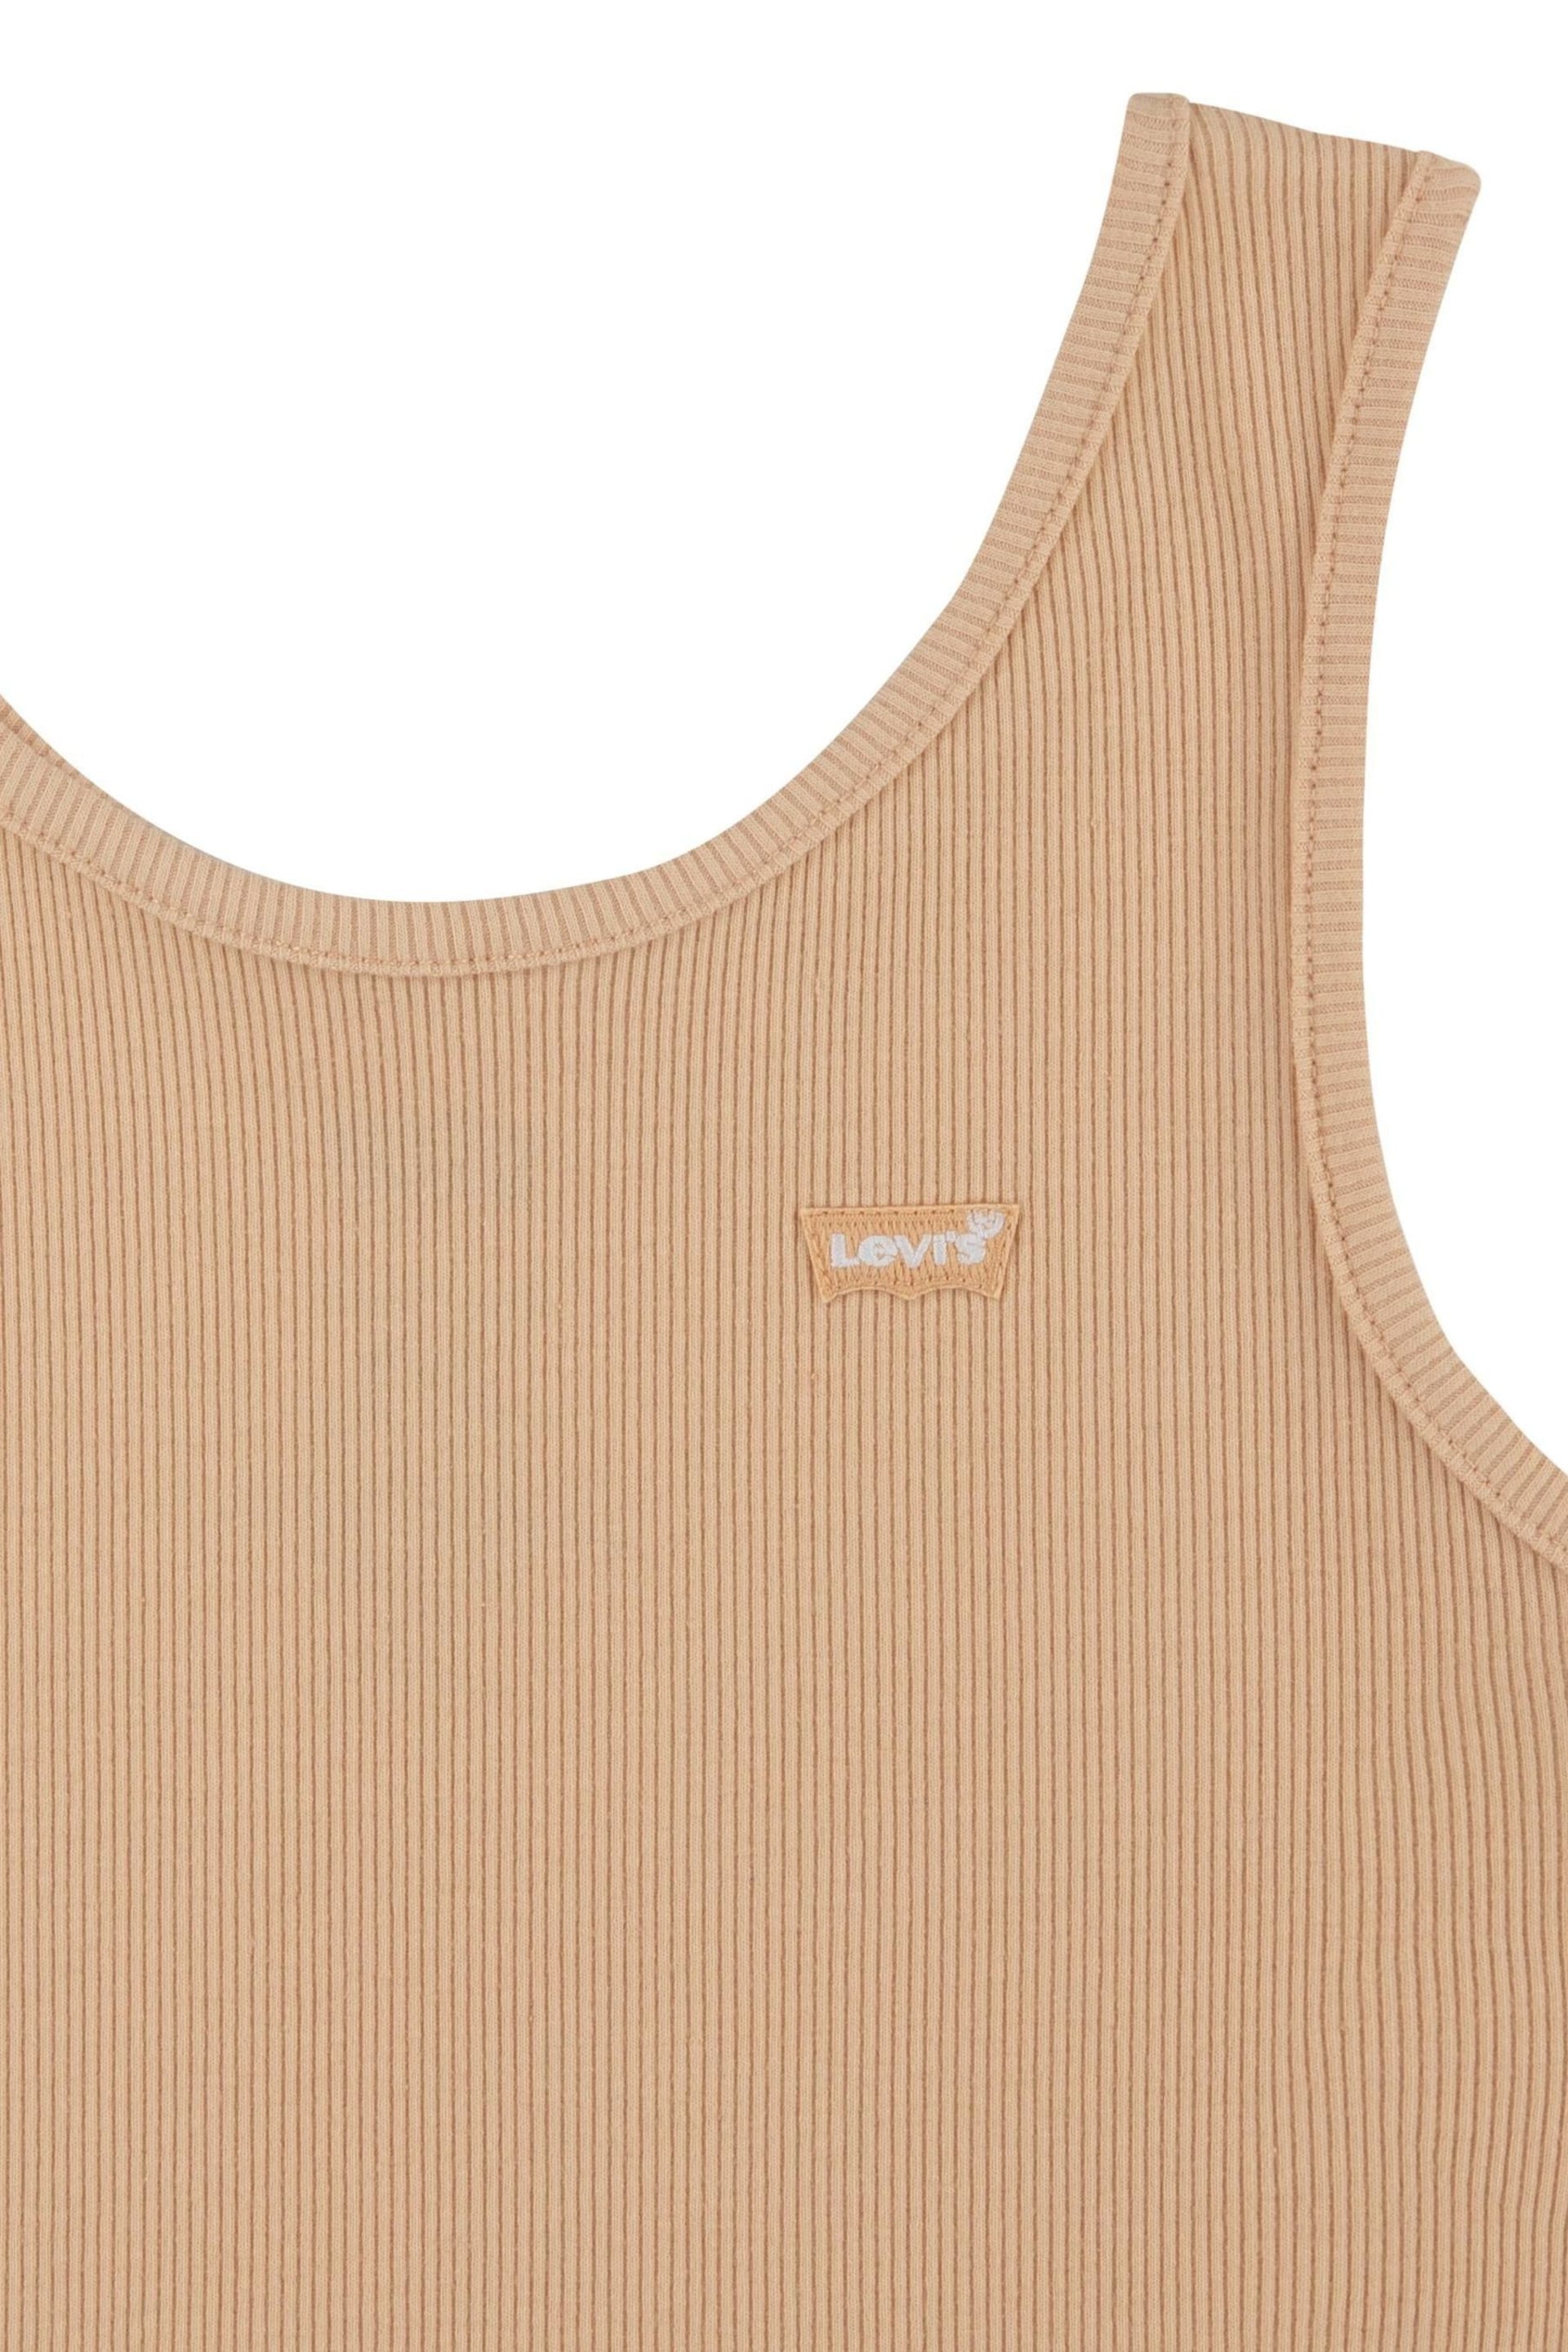 Levi's® Orange Ribbed Logo Tank Top Vest - Image 3 of 4